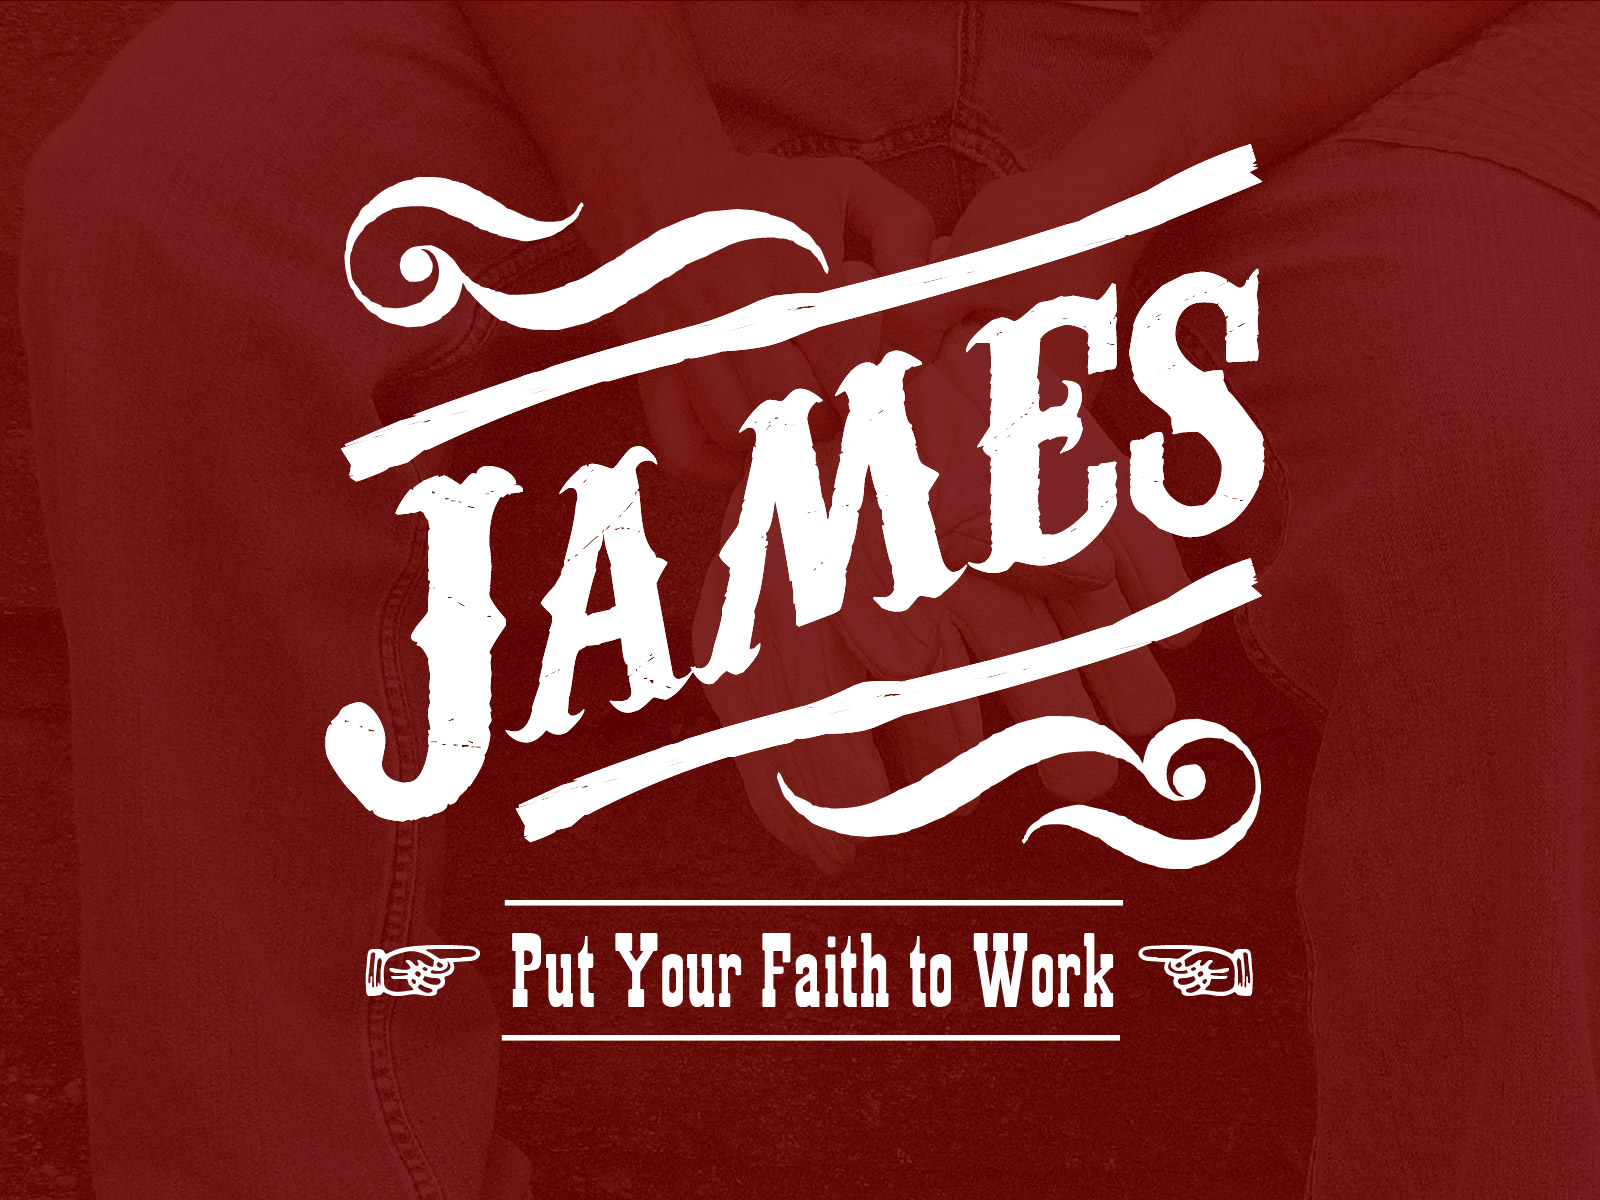 Asking Amiss (James 4:1-17)